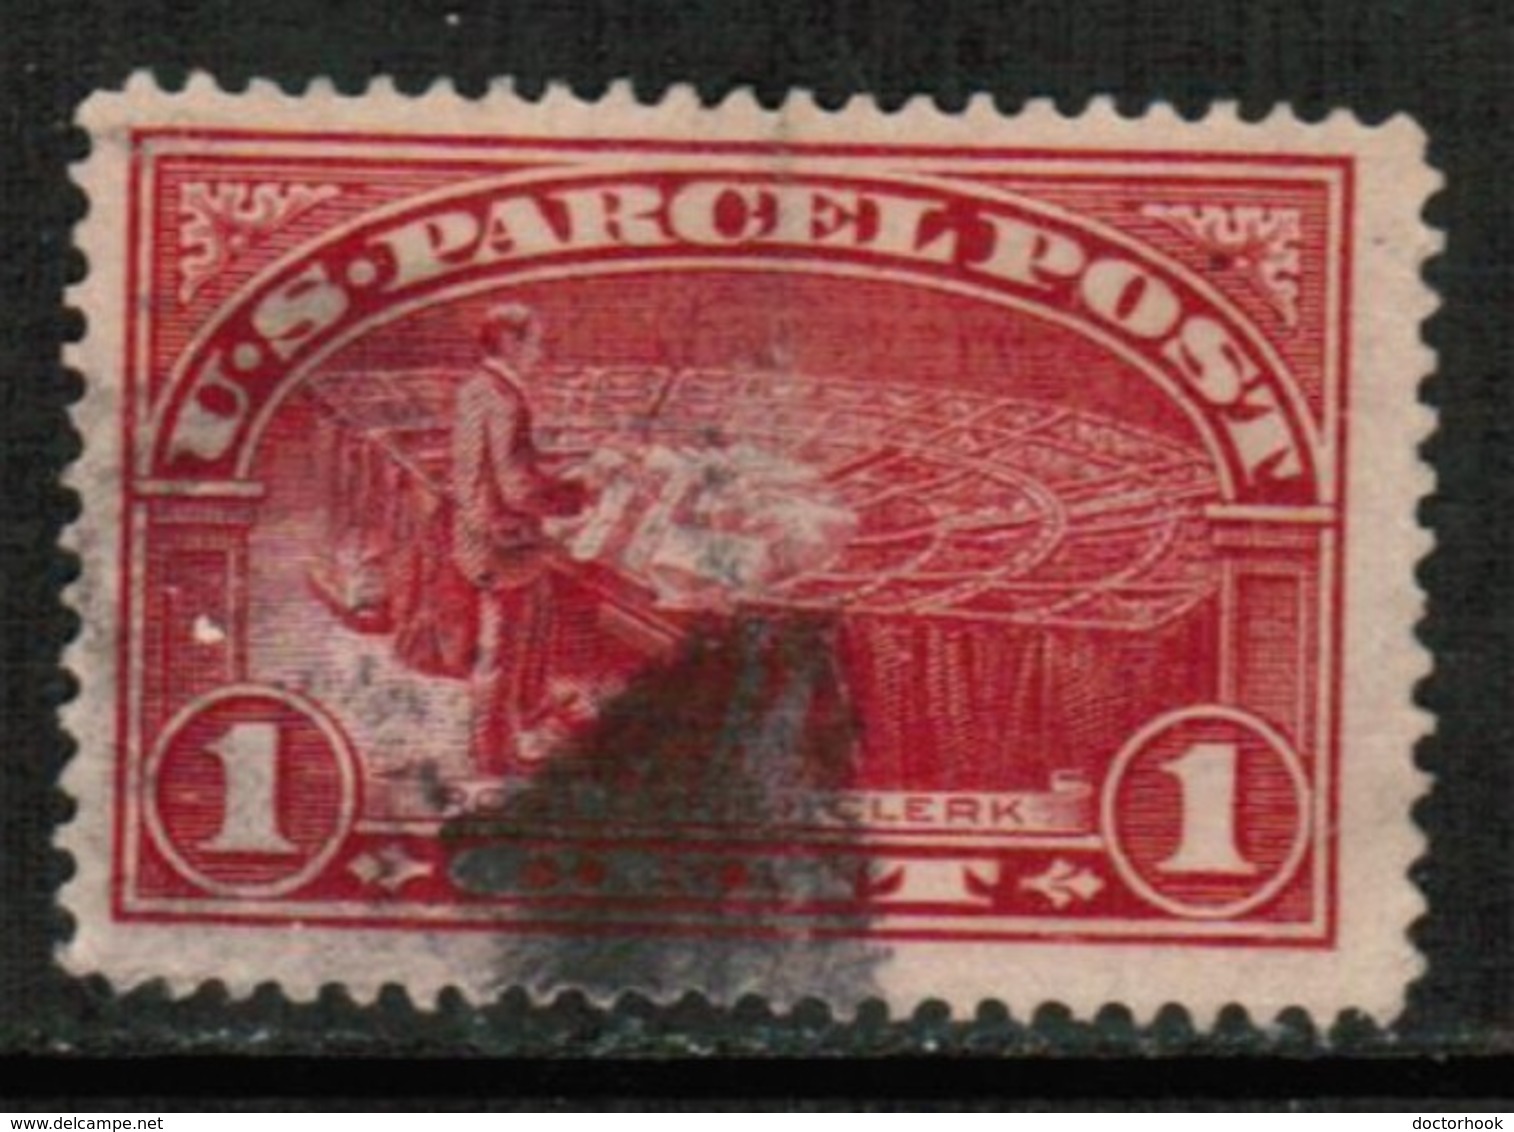 U.S.A.  Scott # Q 1 VF USED (Stamp Scan # 429) - Reisgoedzegels